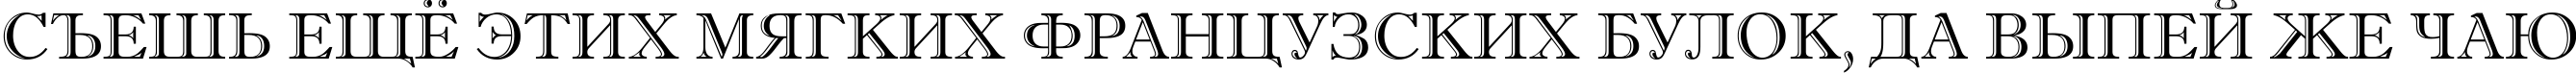 Пример написания шрифтом a_AntiqueTitulGr текста на русском